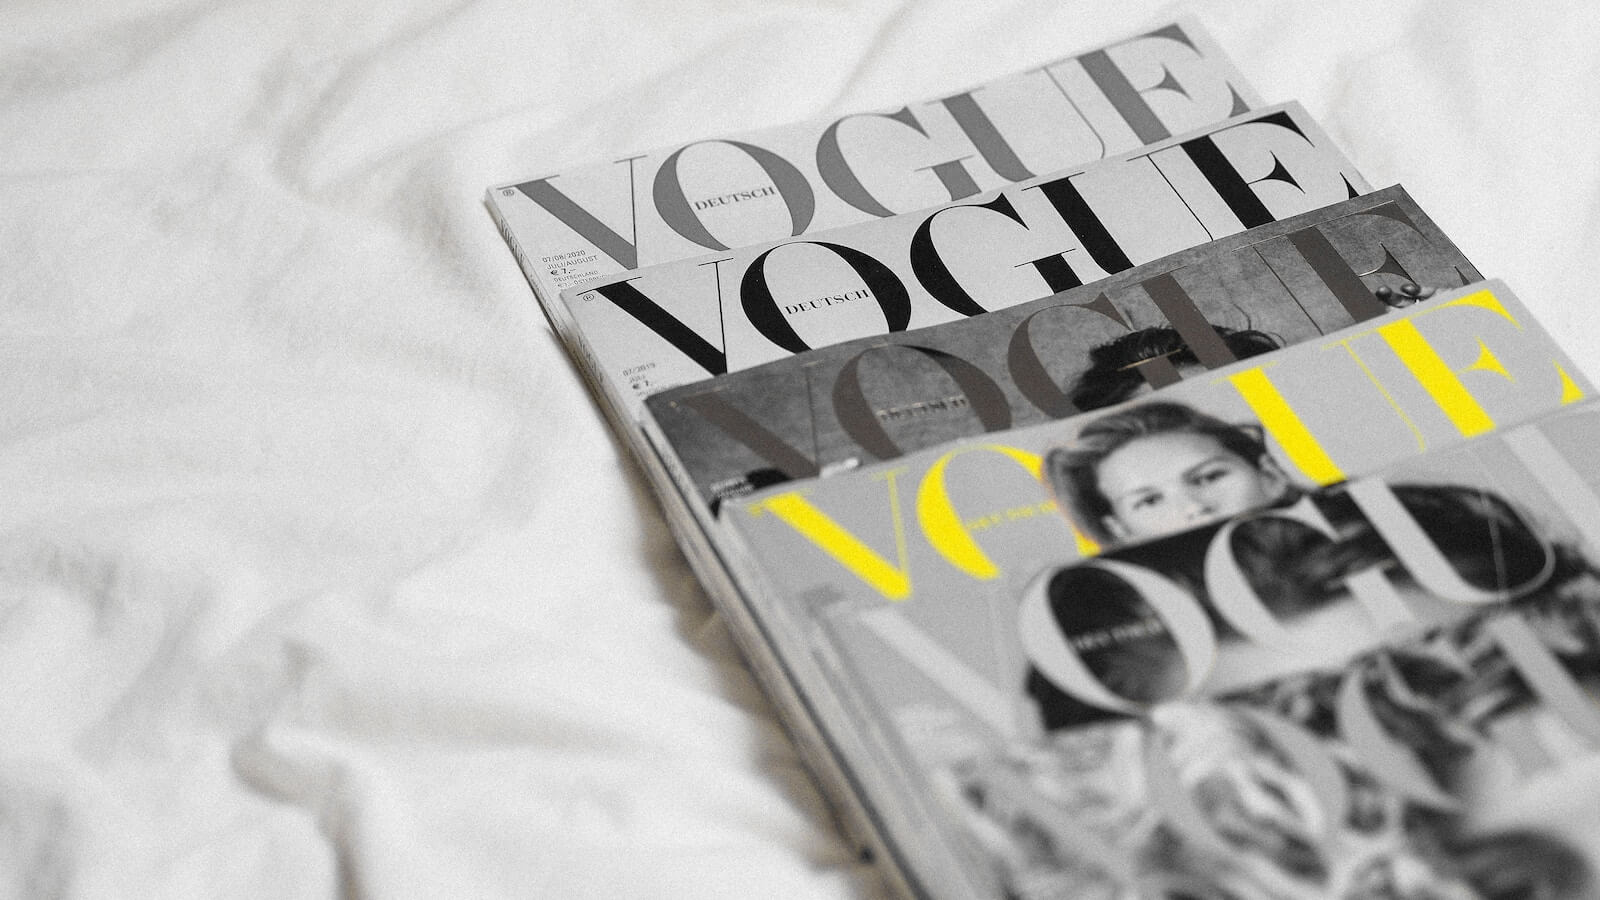 5 editoras de moda que son inspiración para muchas mujeres, MUJER